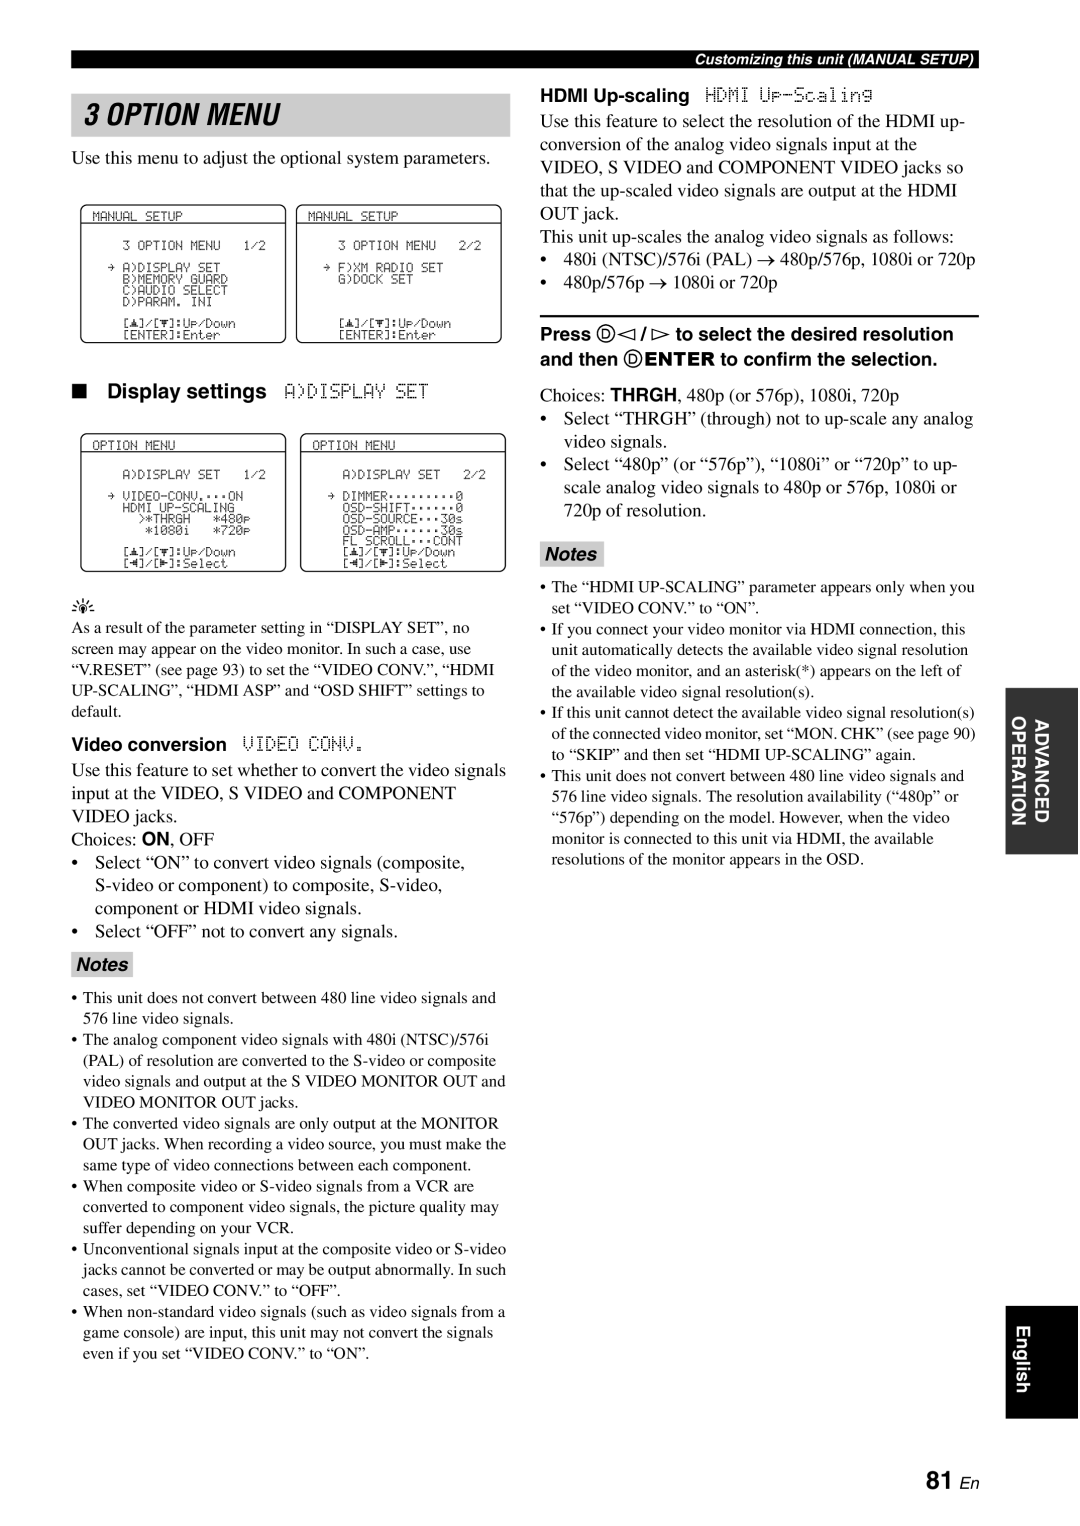 Yamaha HTR-6080 owner manual Option Menu, 81 En, Display settings ADISPLAY SET, Notes 